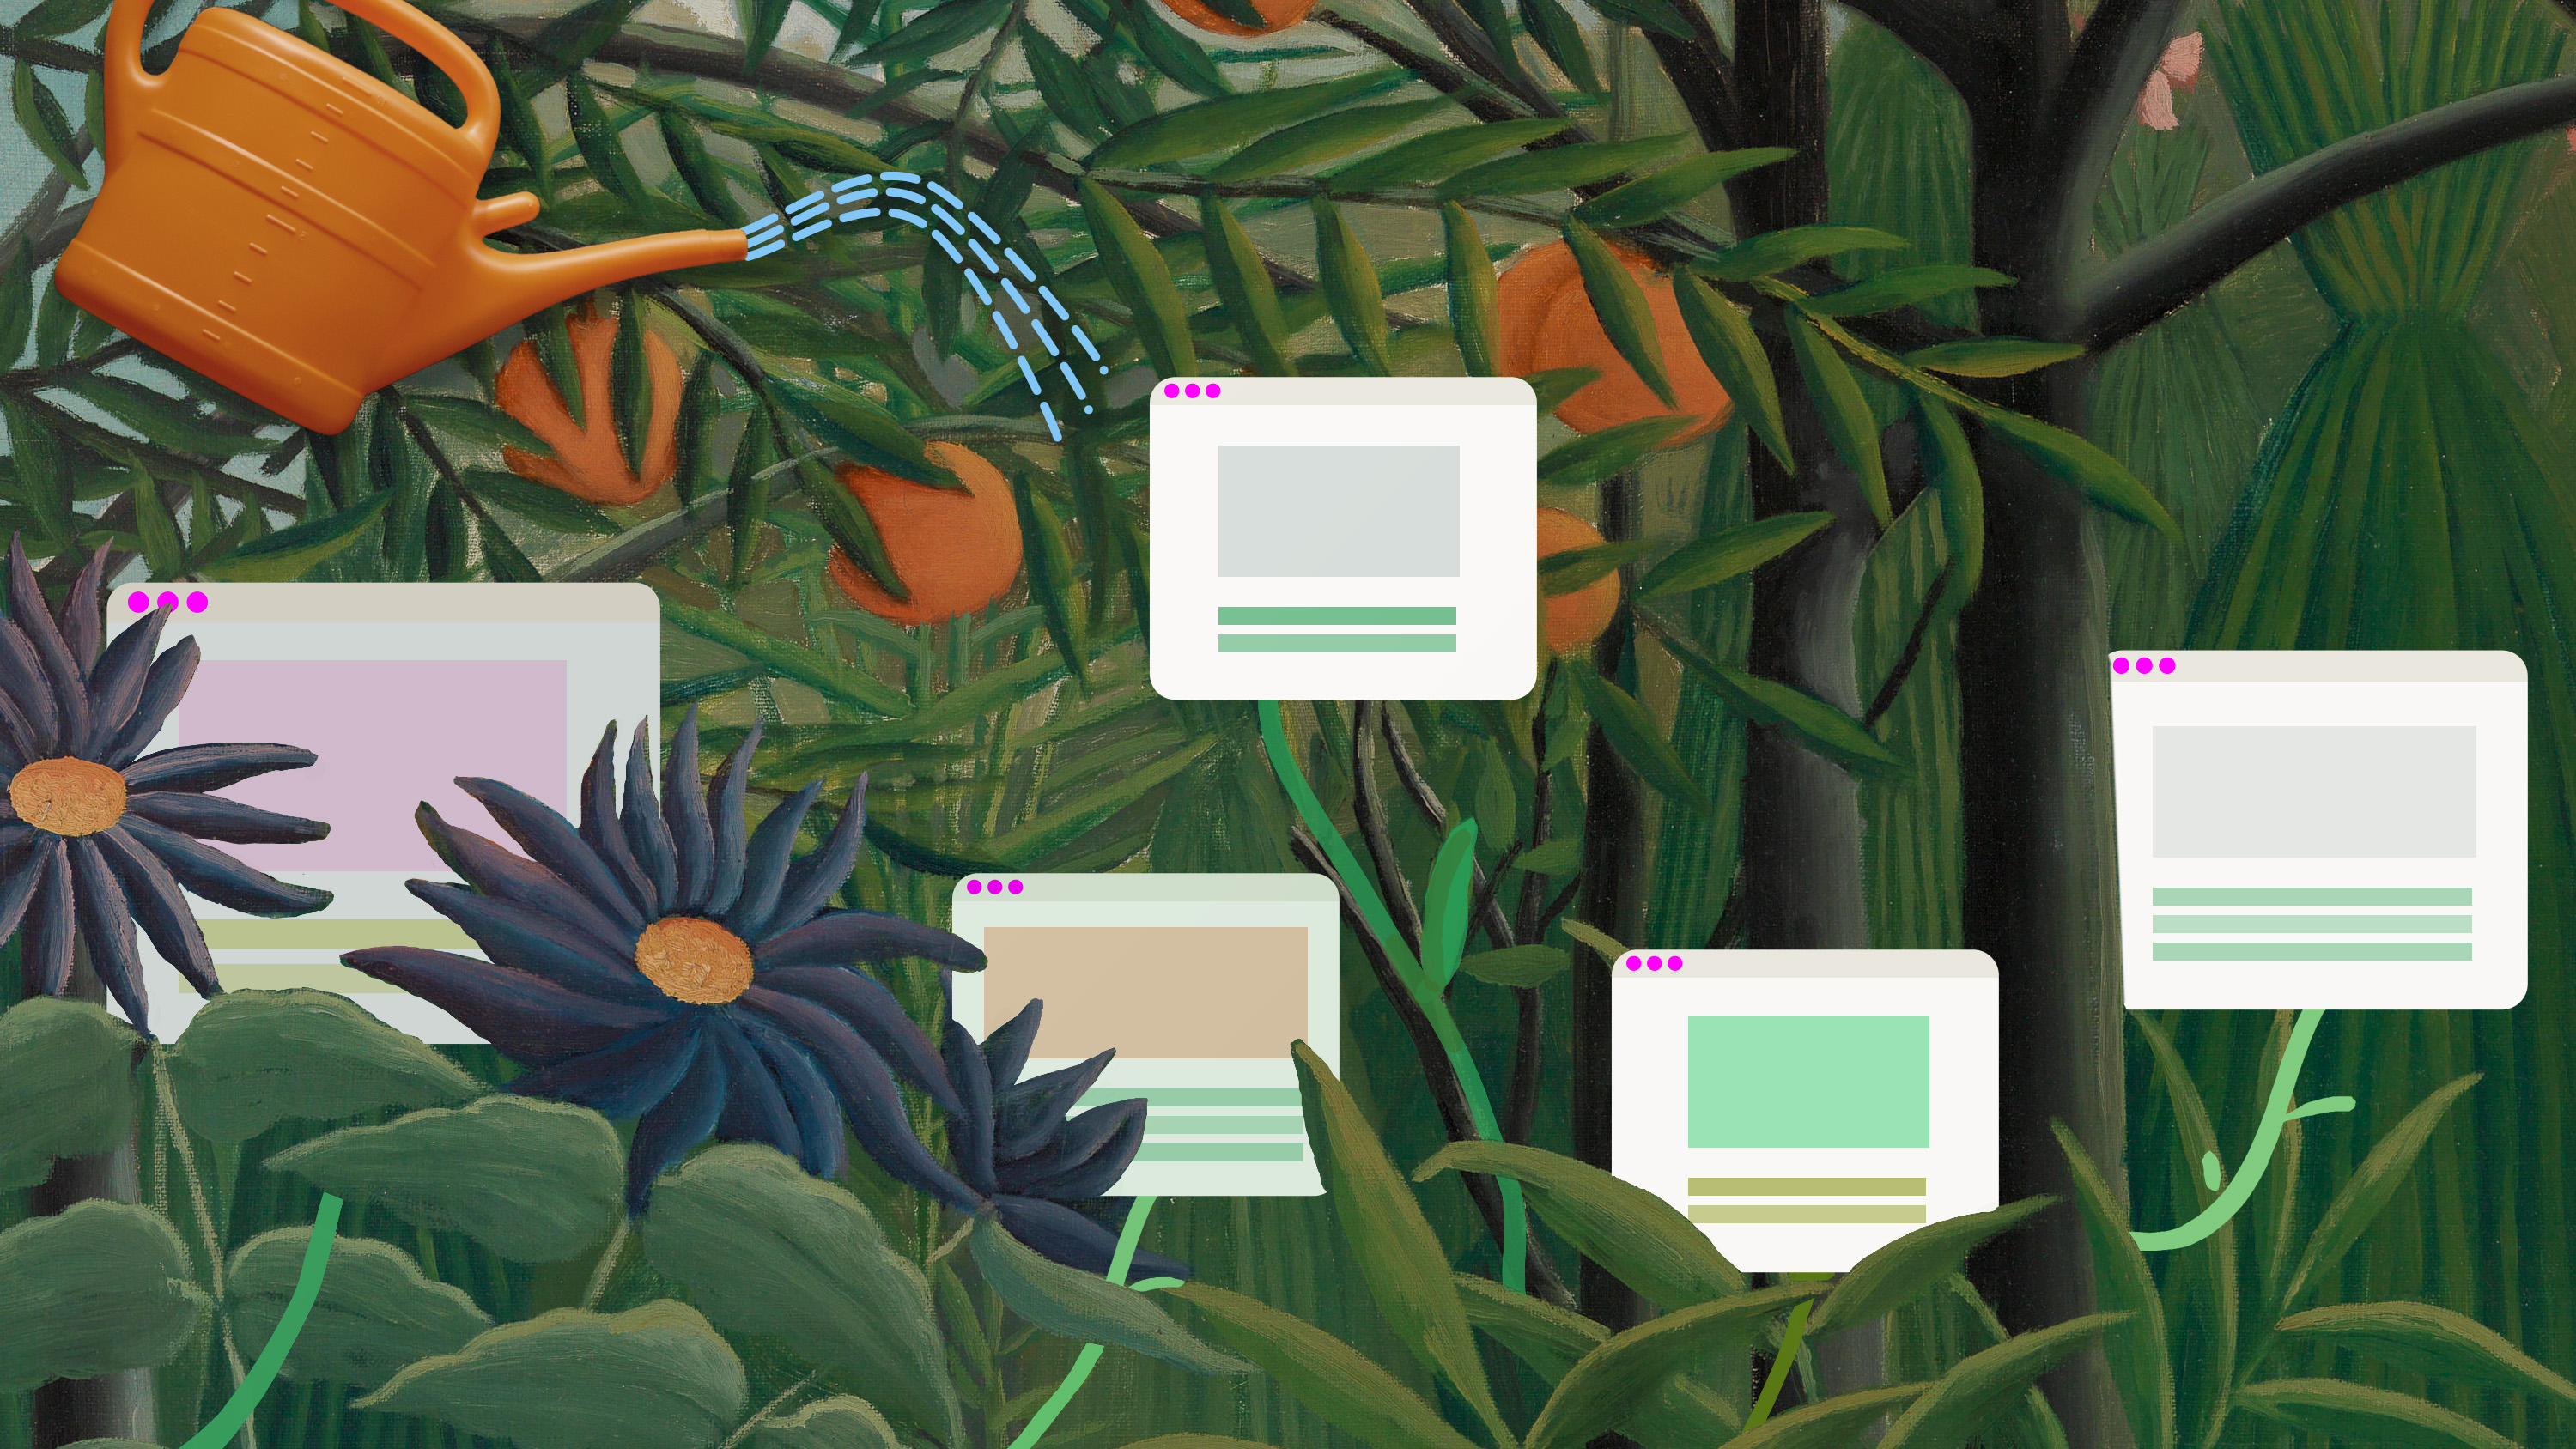 digital garden illustration of wild plants with flowers growing around screens